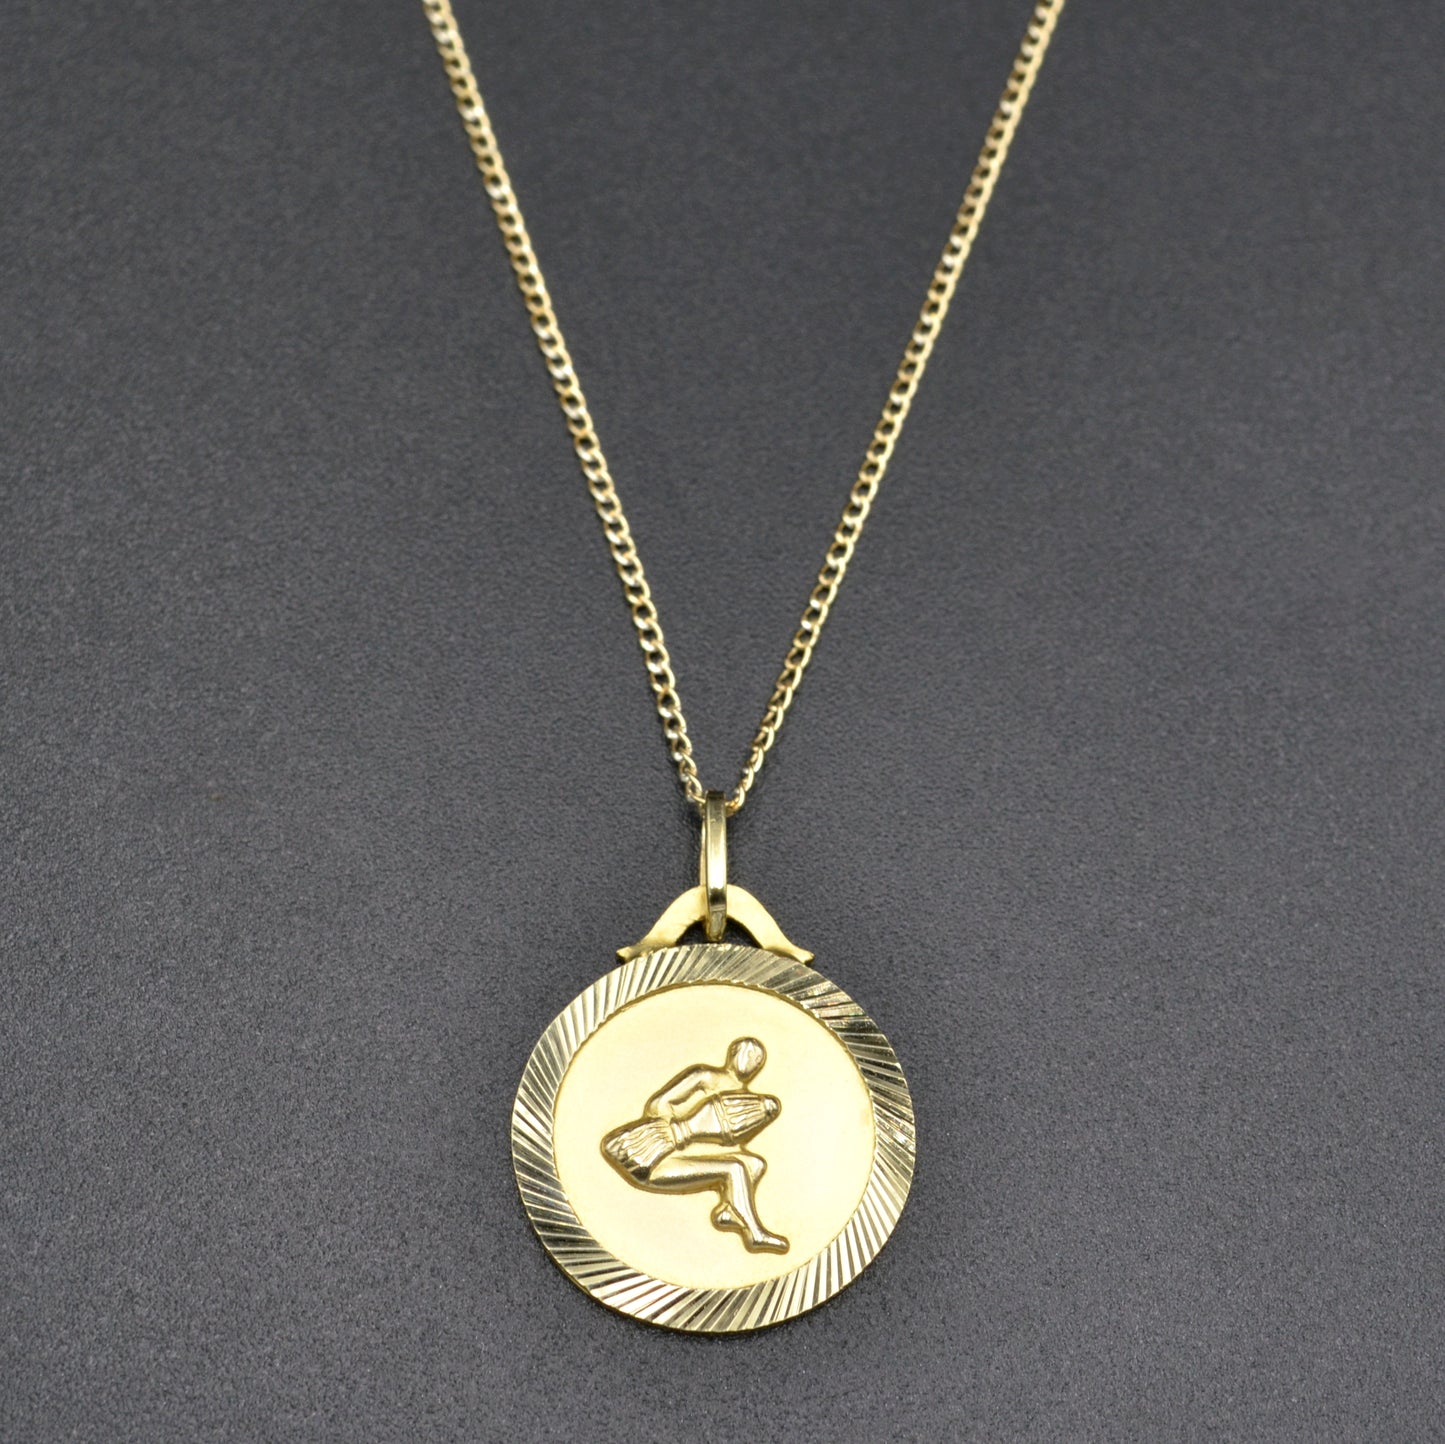 Vintage 14k Italian Gold Aquarius Zodiac Astrology Pendant Necklace